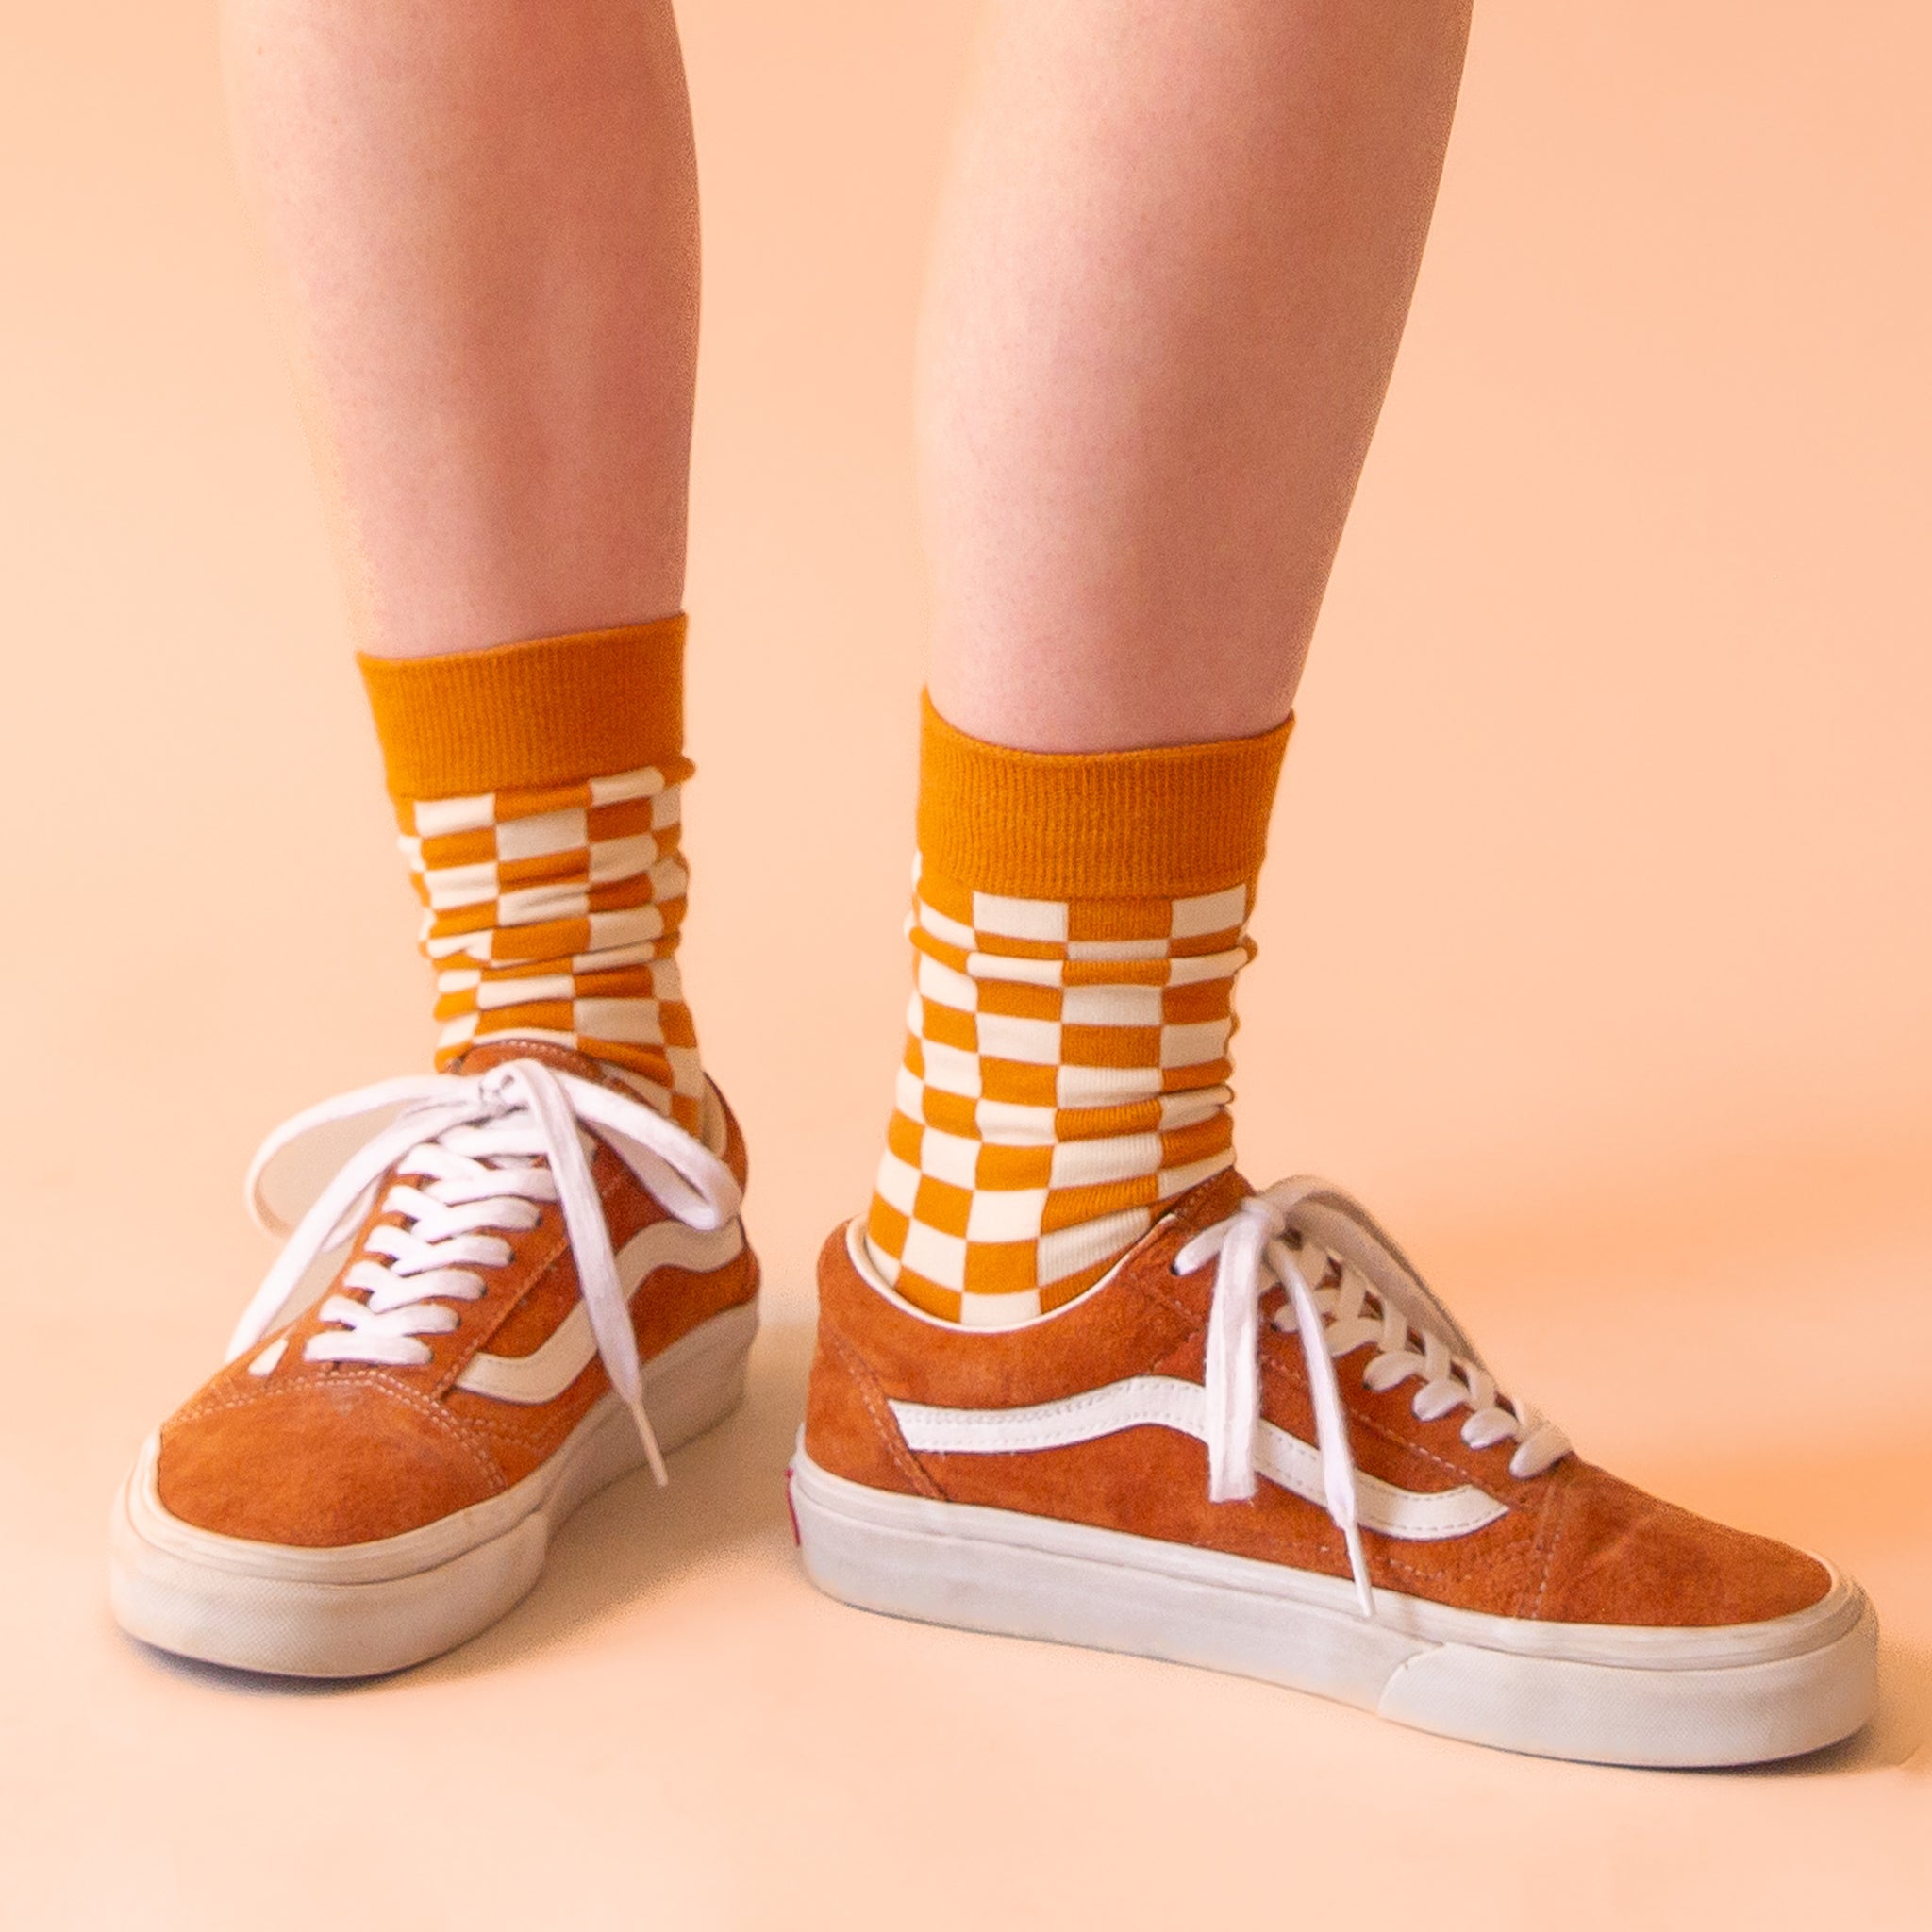 A burnt orange and white checker print pair of socks.